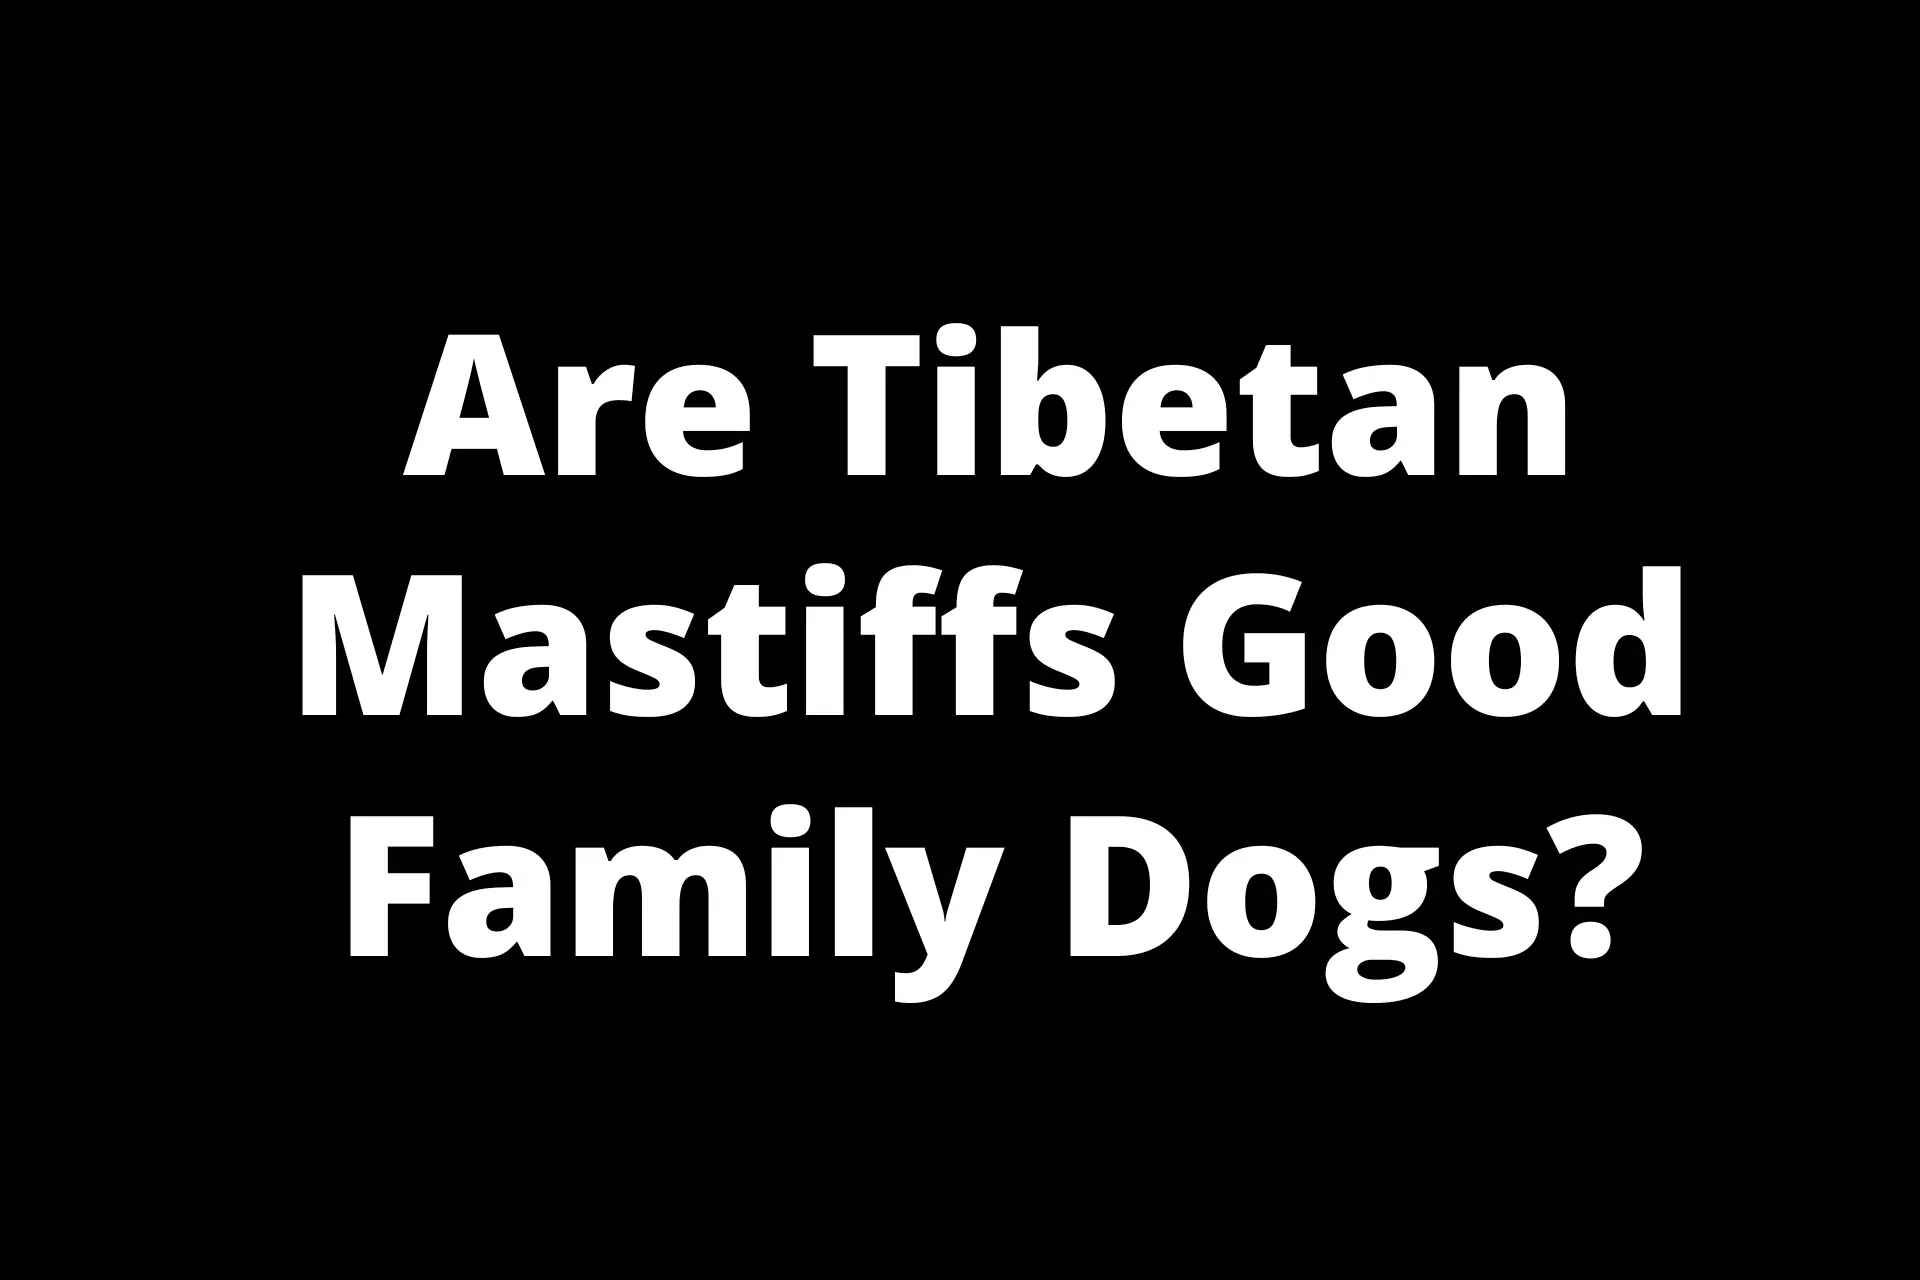 Are Tibetan Mastiffs Good Family Dogs